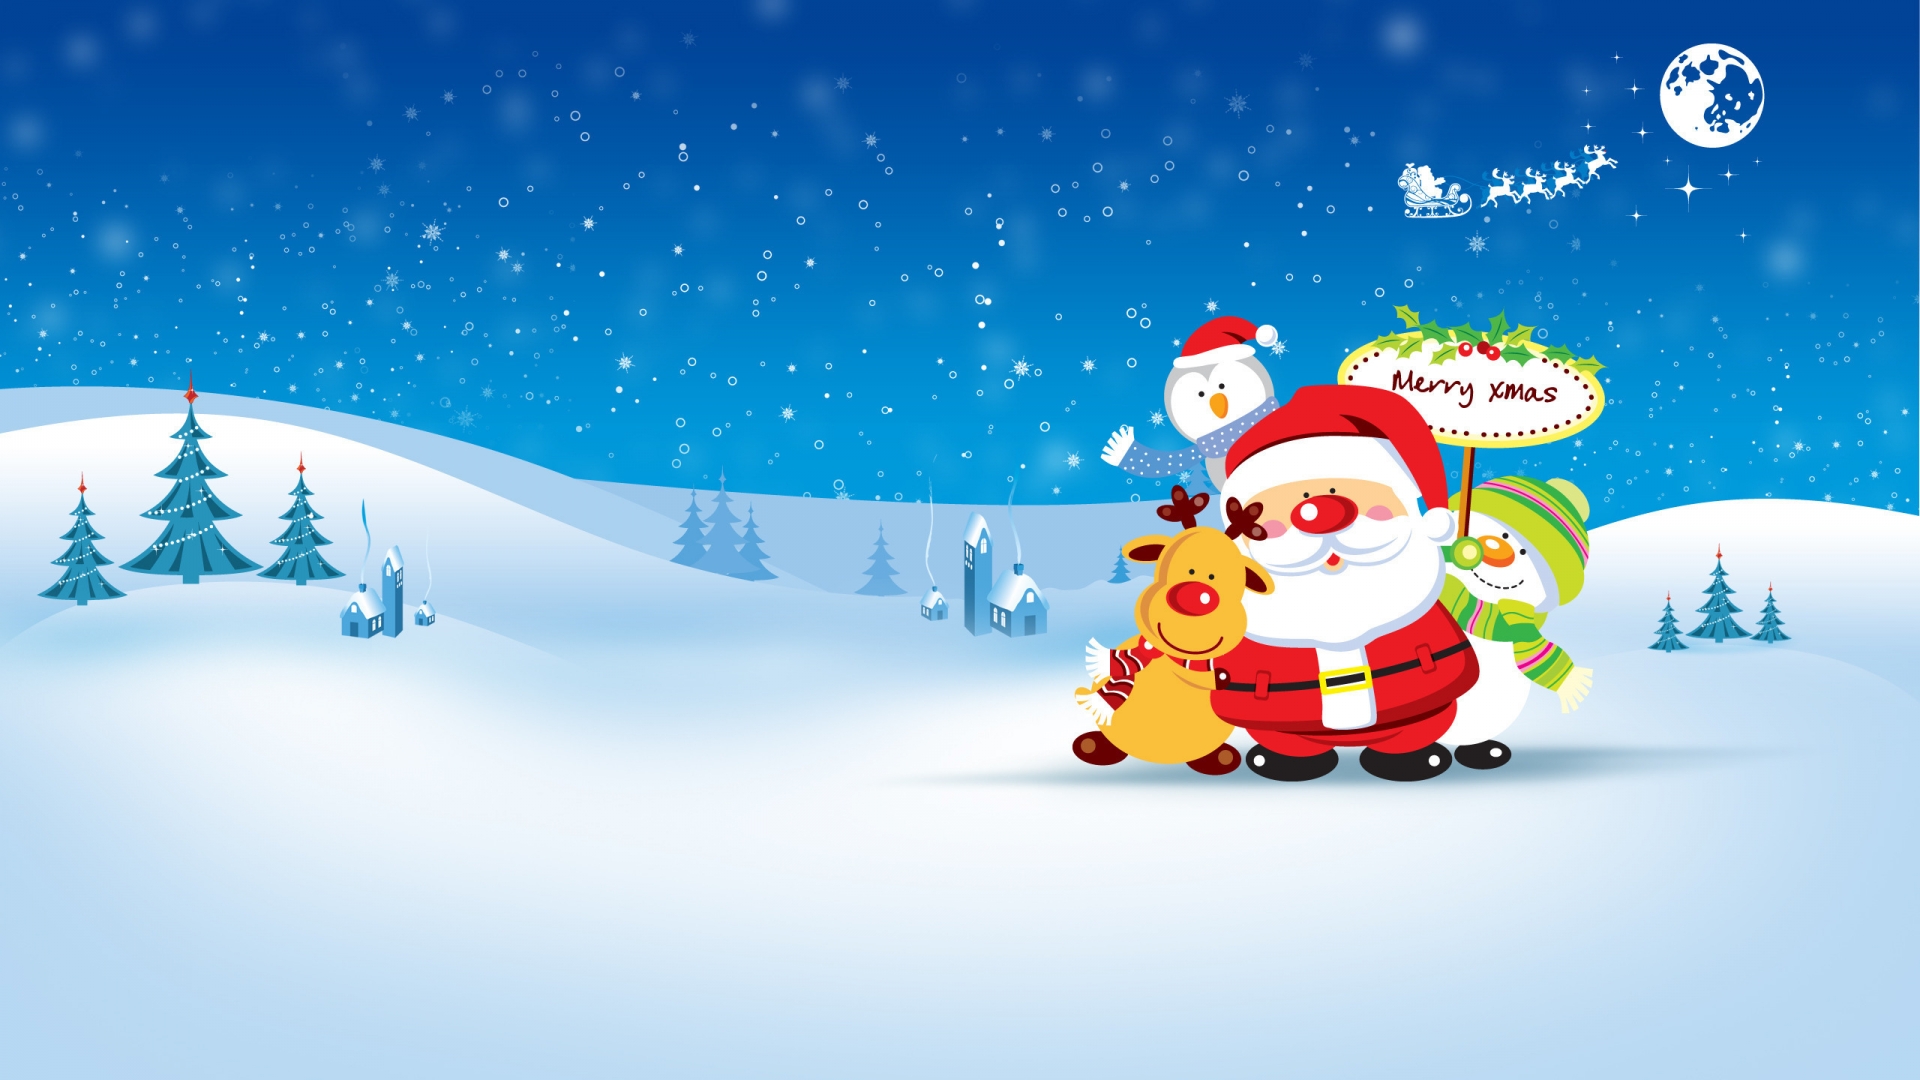 Merry Christmas From Santa Clouse For 1920 X 1080 Hdtv - Alexa Skills For Christmas - HD Wallpaper 